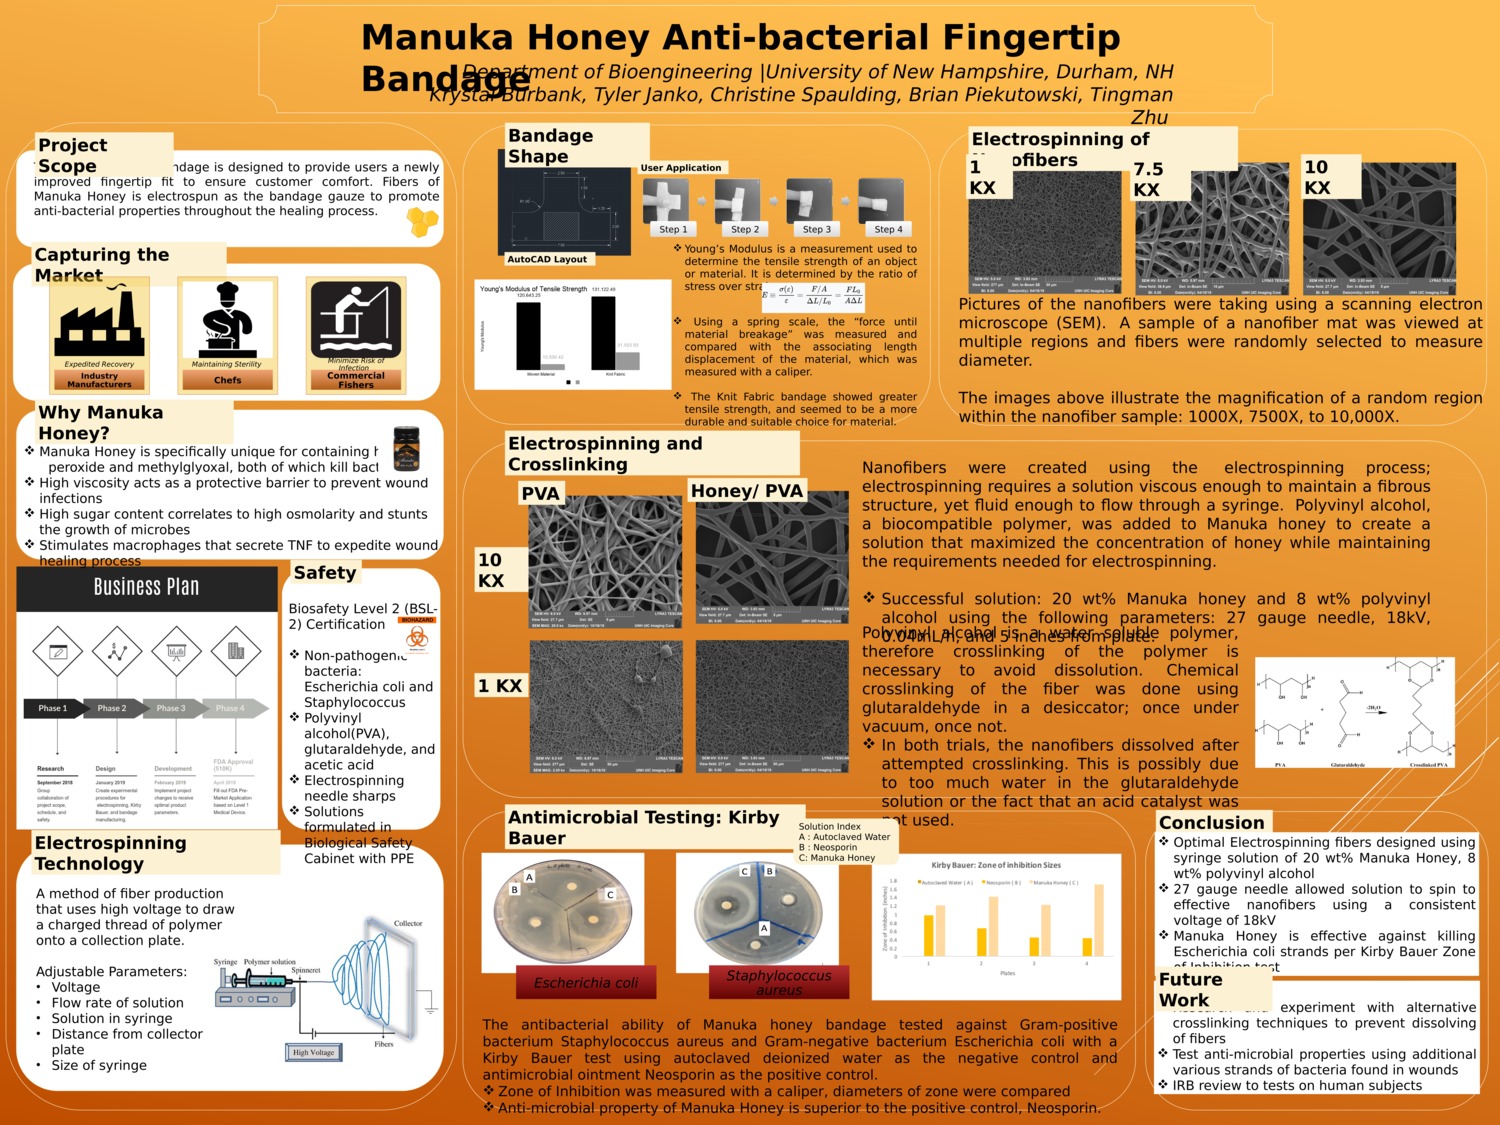 Manuka Honey Anti-Bacterial Fingertip Bandage by KBurbank